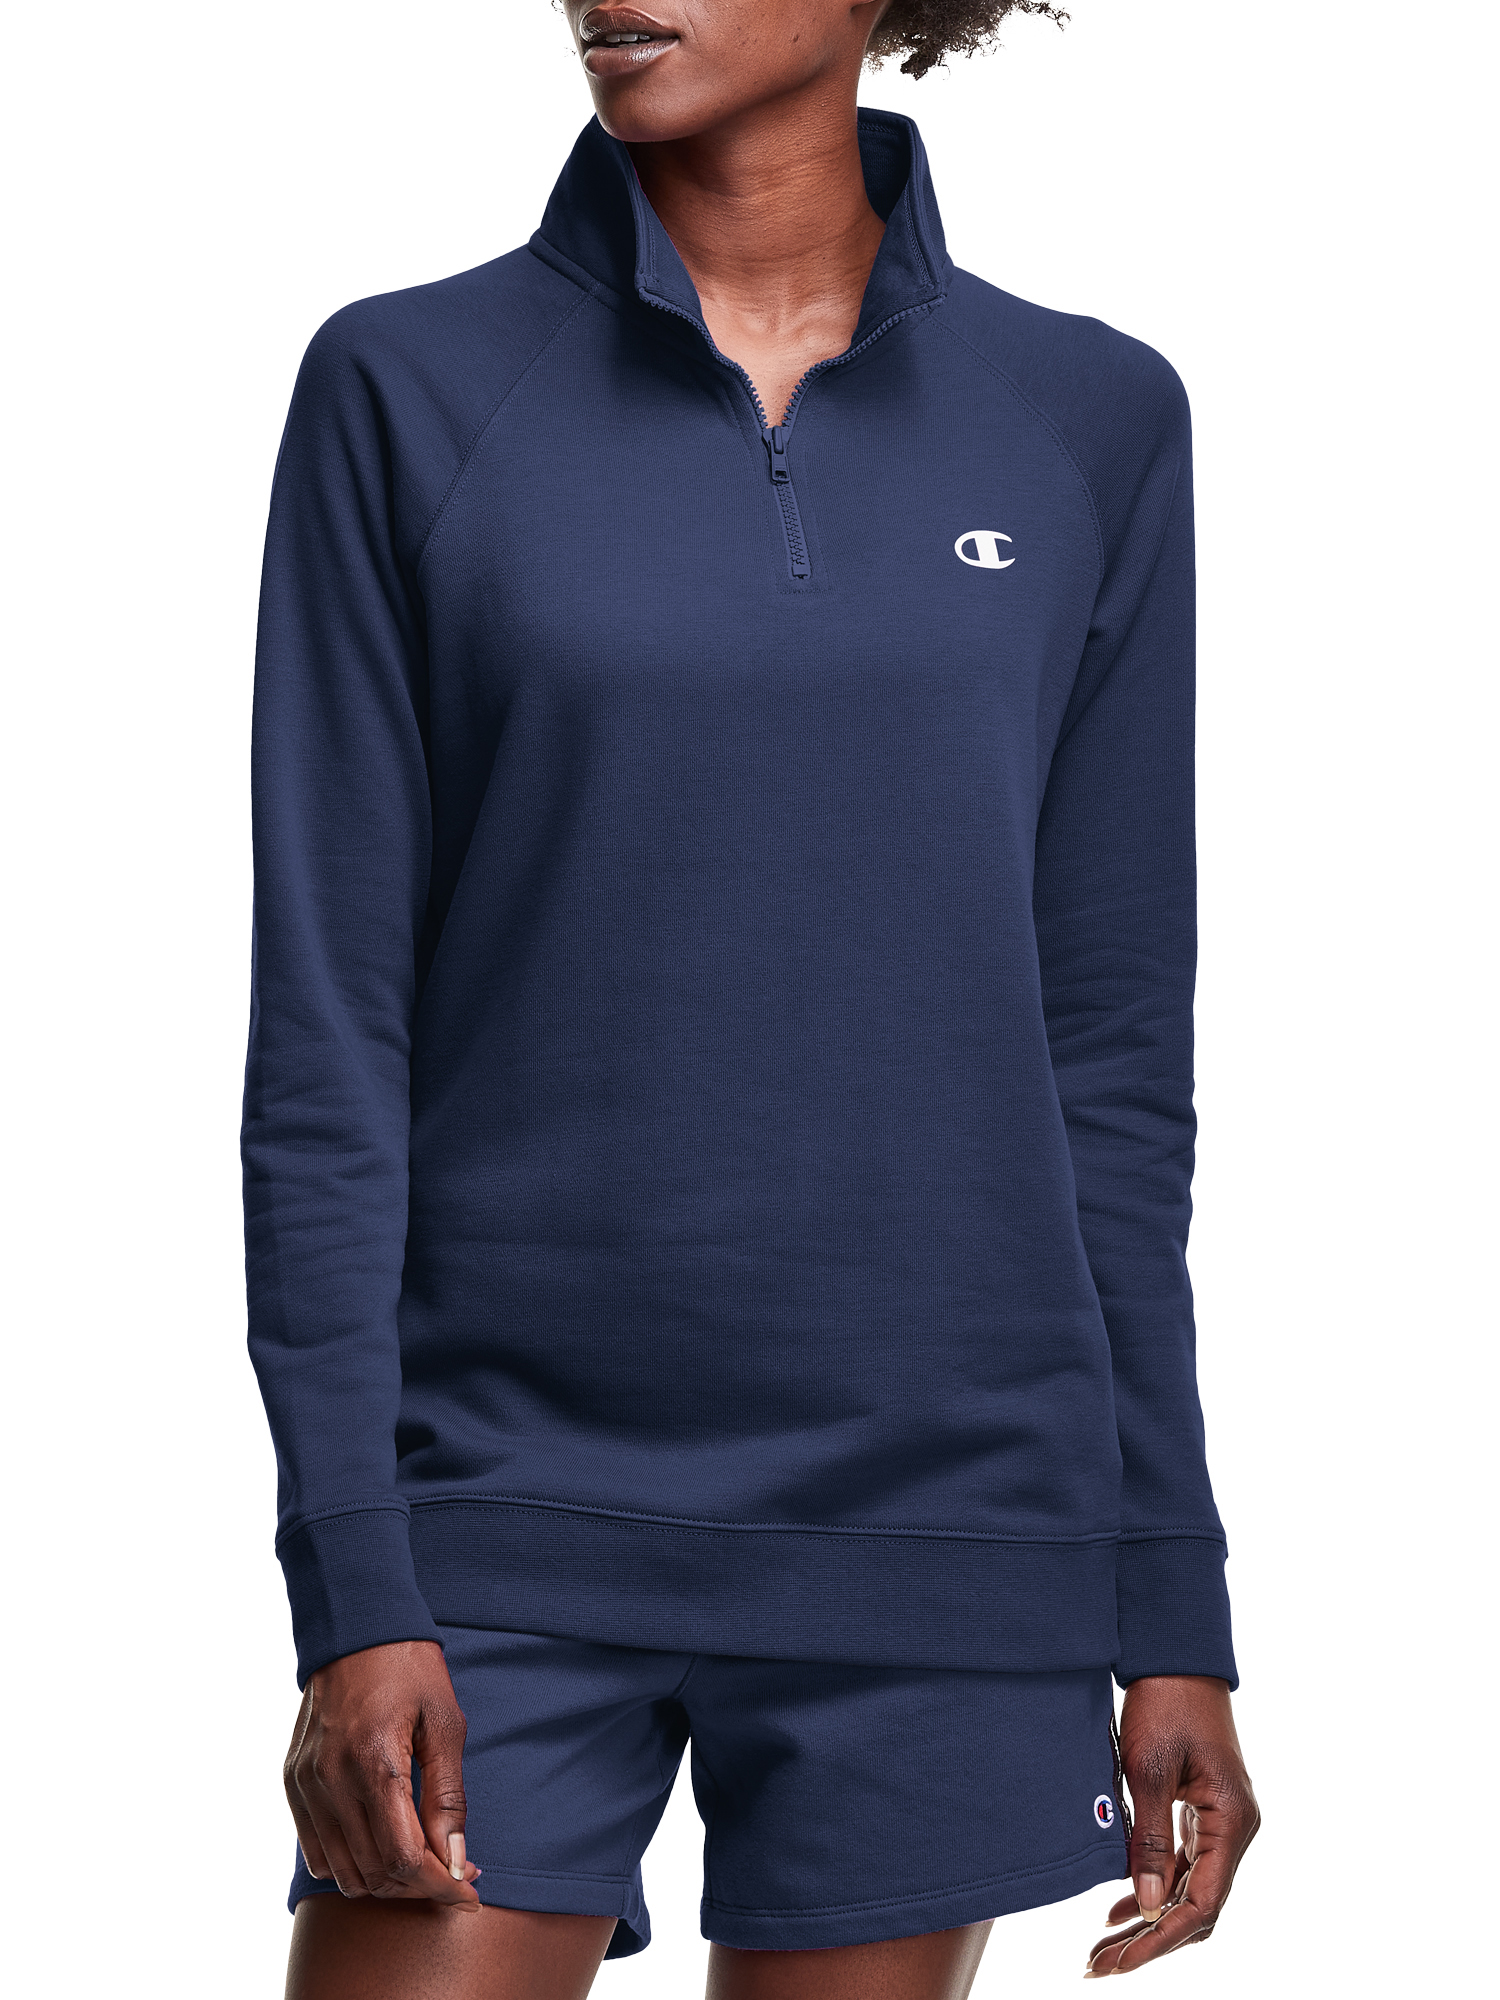 Champion Women's Long Sleeve Quarter Zip Pullover - image 1 of 6